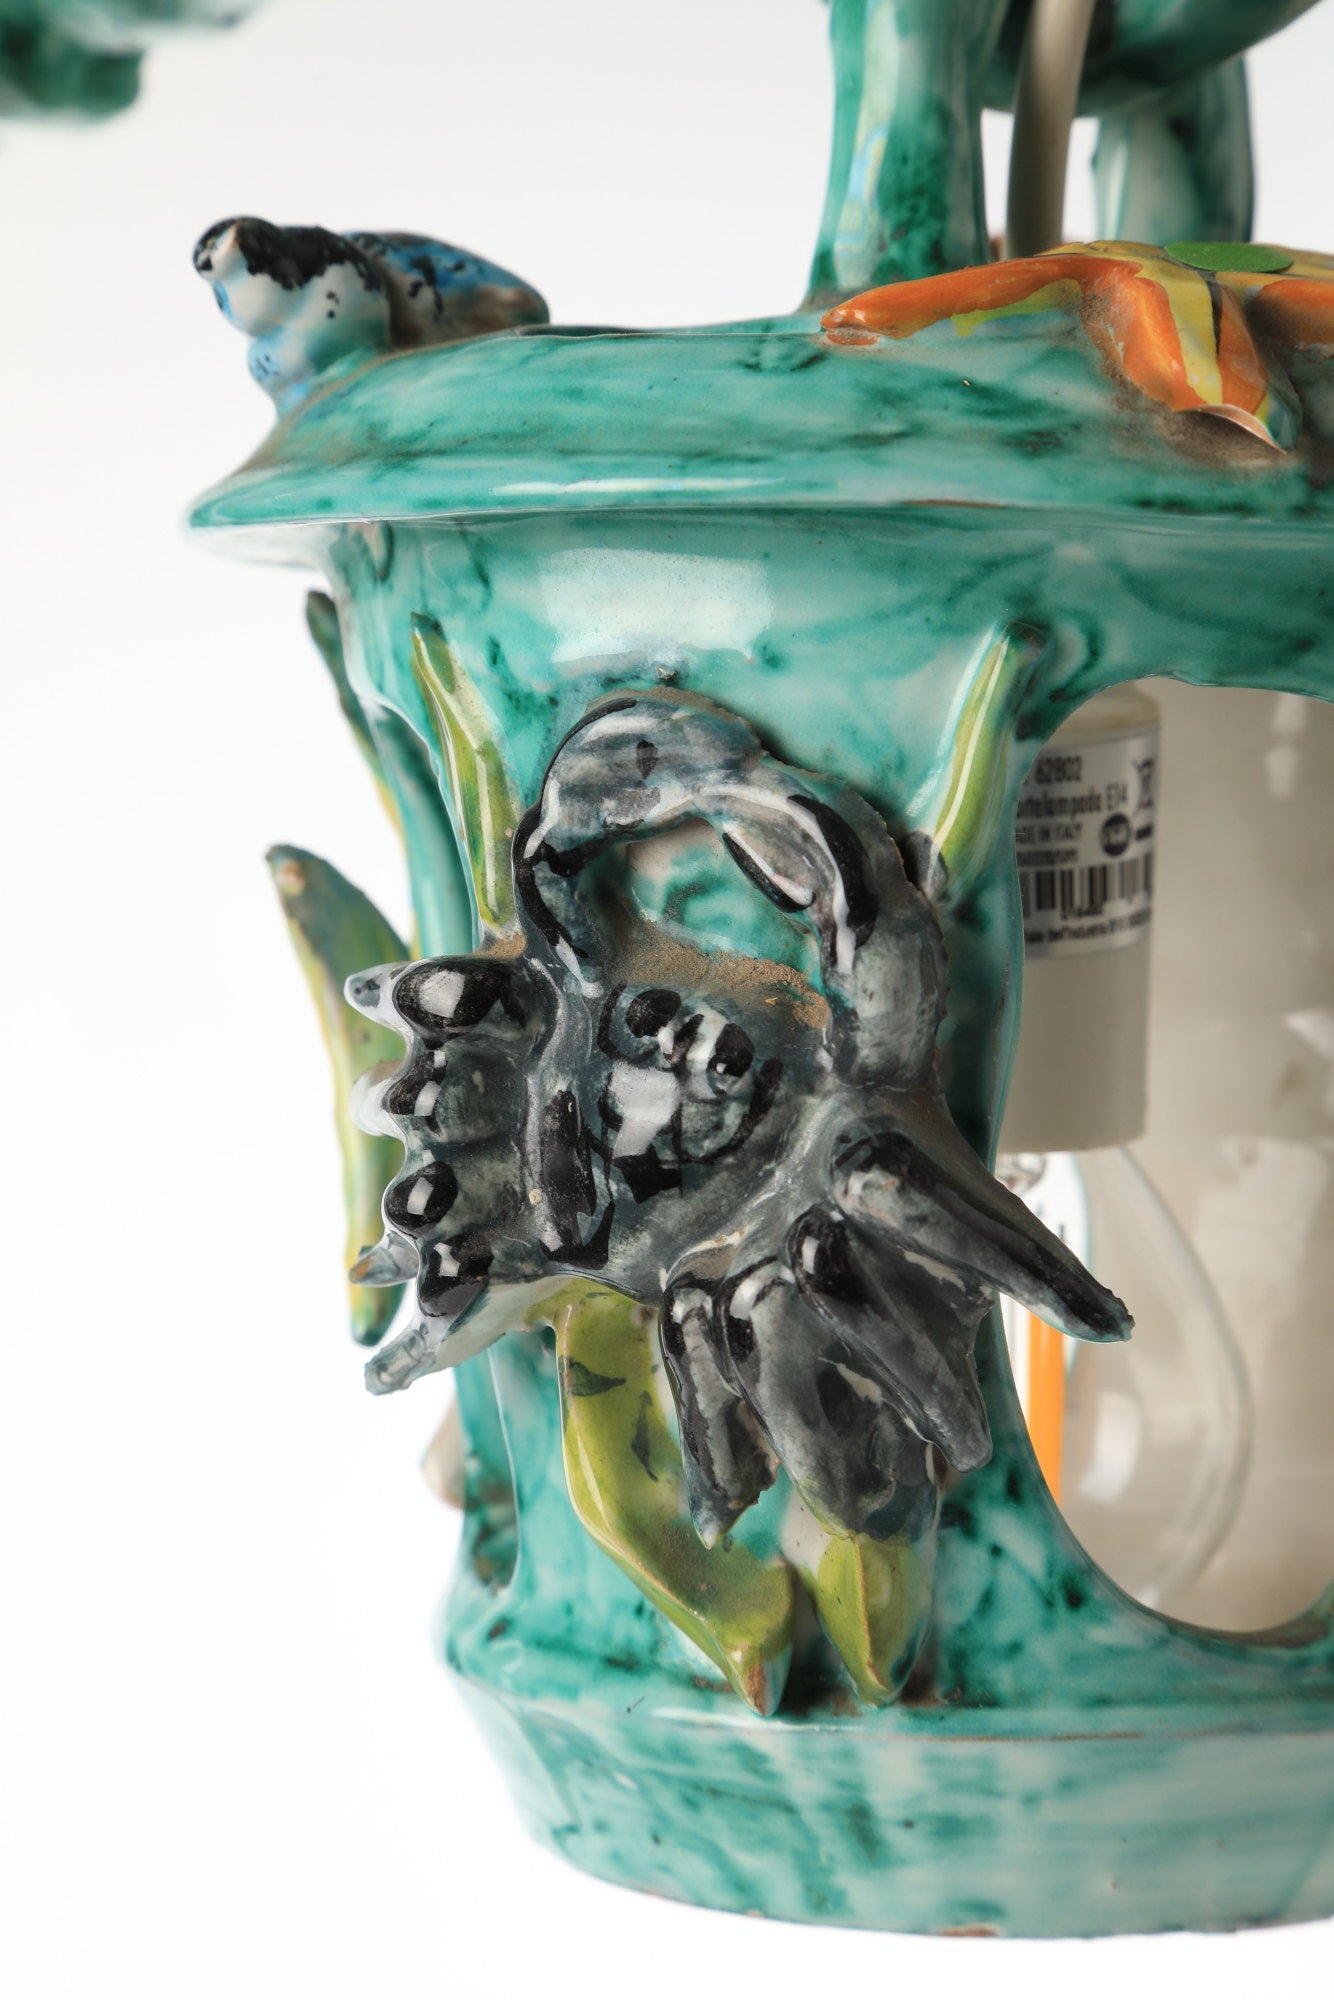 Vietri ceramic lantern with marine figures